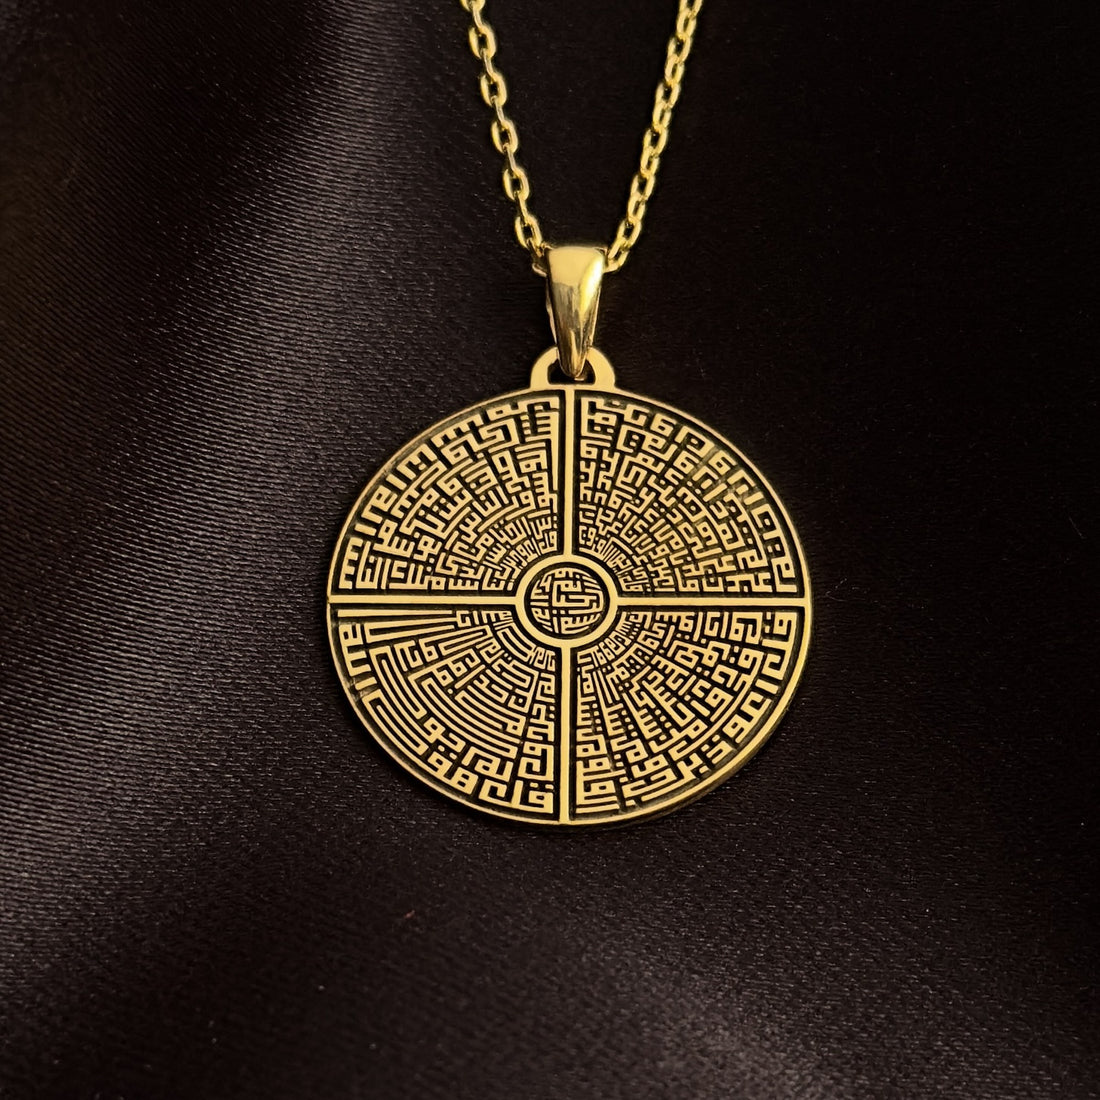 islamic-jewelry-4-qul-kufic-design-islamic-necklace-18k-gold-pendant-on-925-silver-elegant-gold-finish-spiritual-shukranislamicart